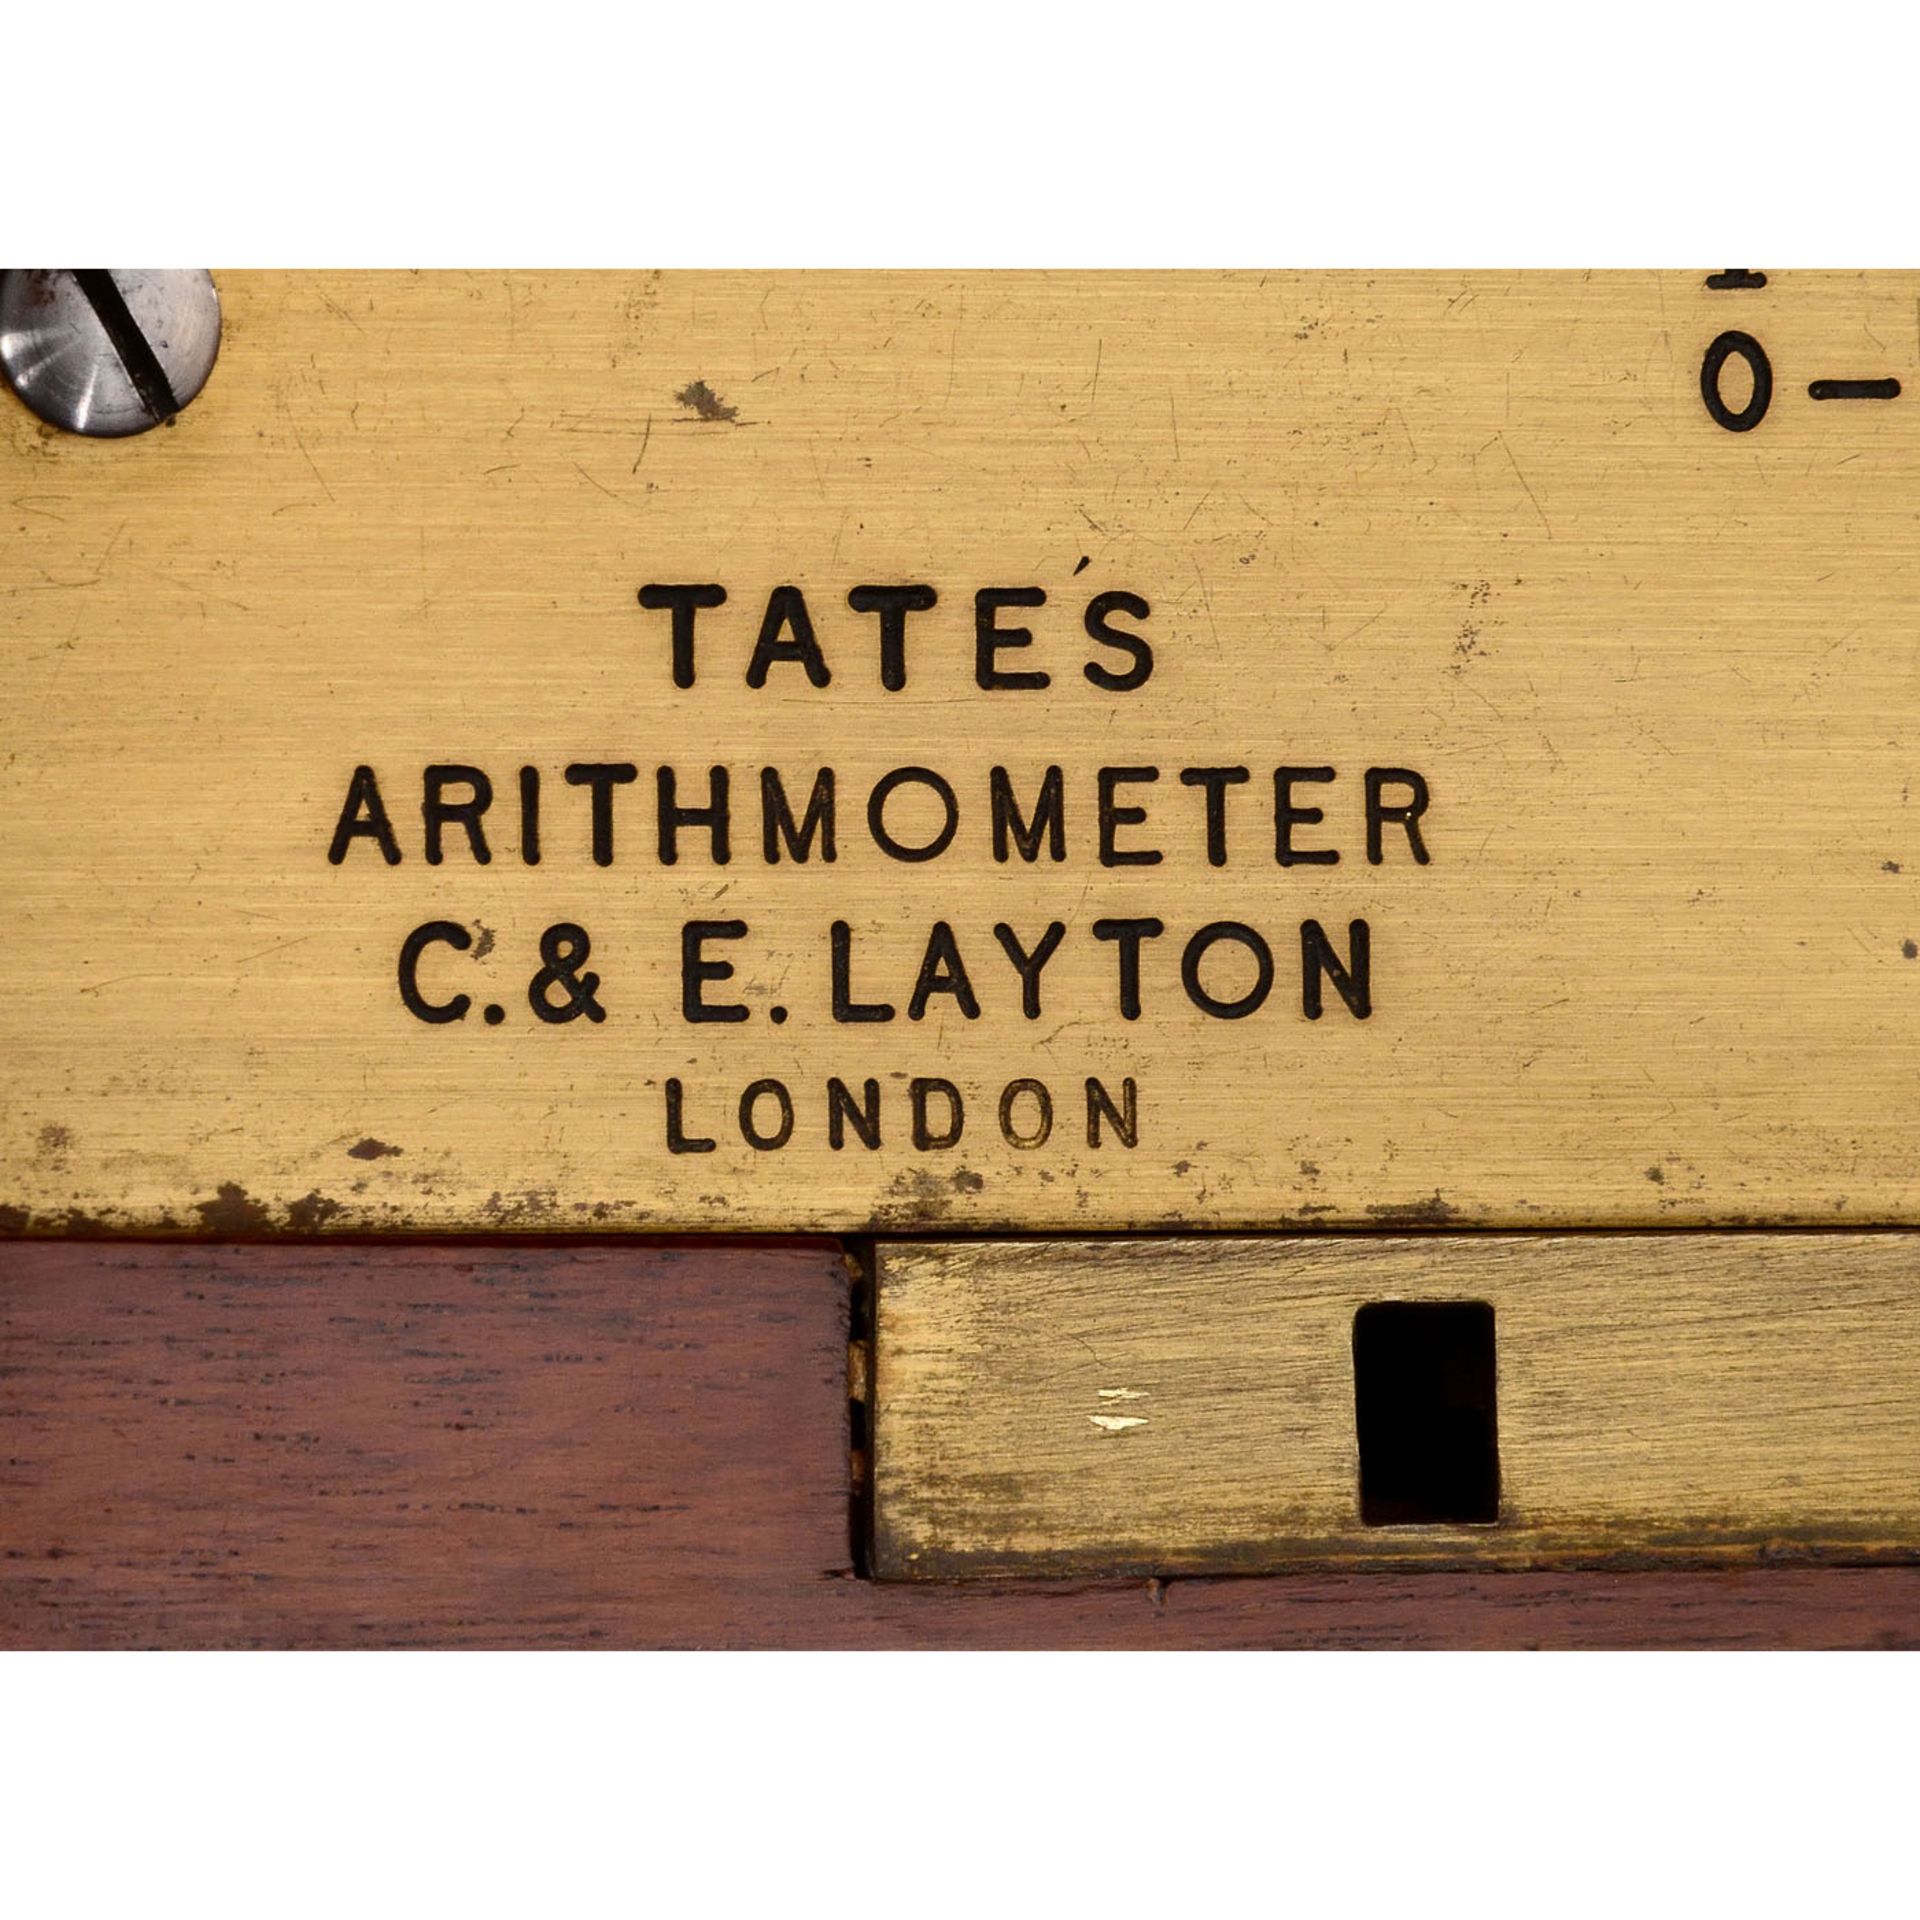 Rare Tate's Arithmometer, c. 1900 - Image 3 of 3